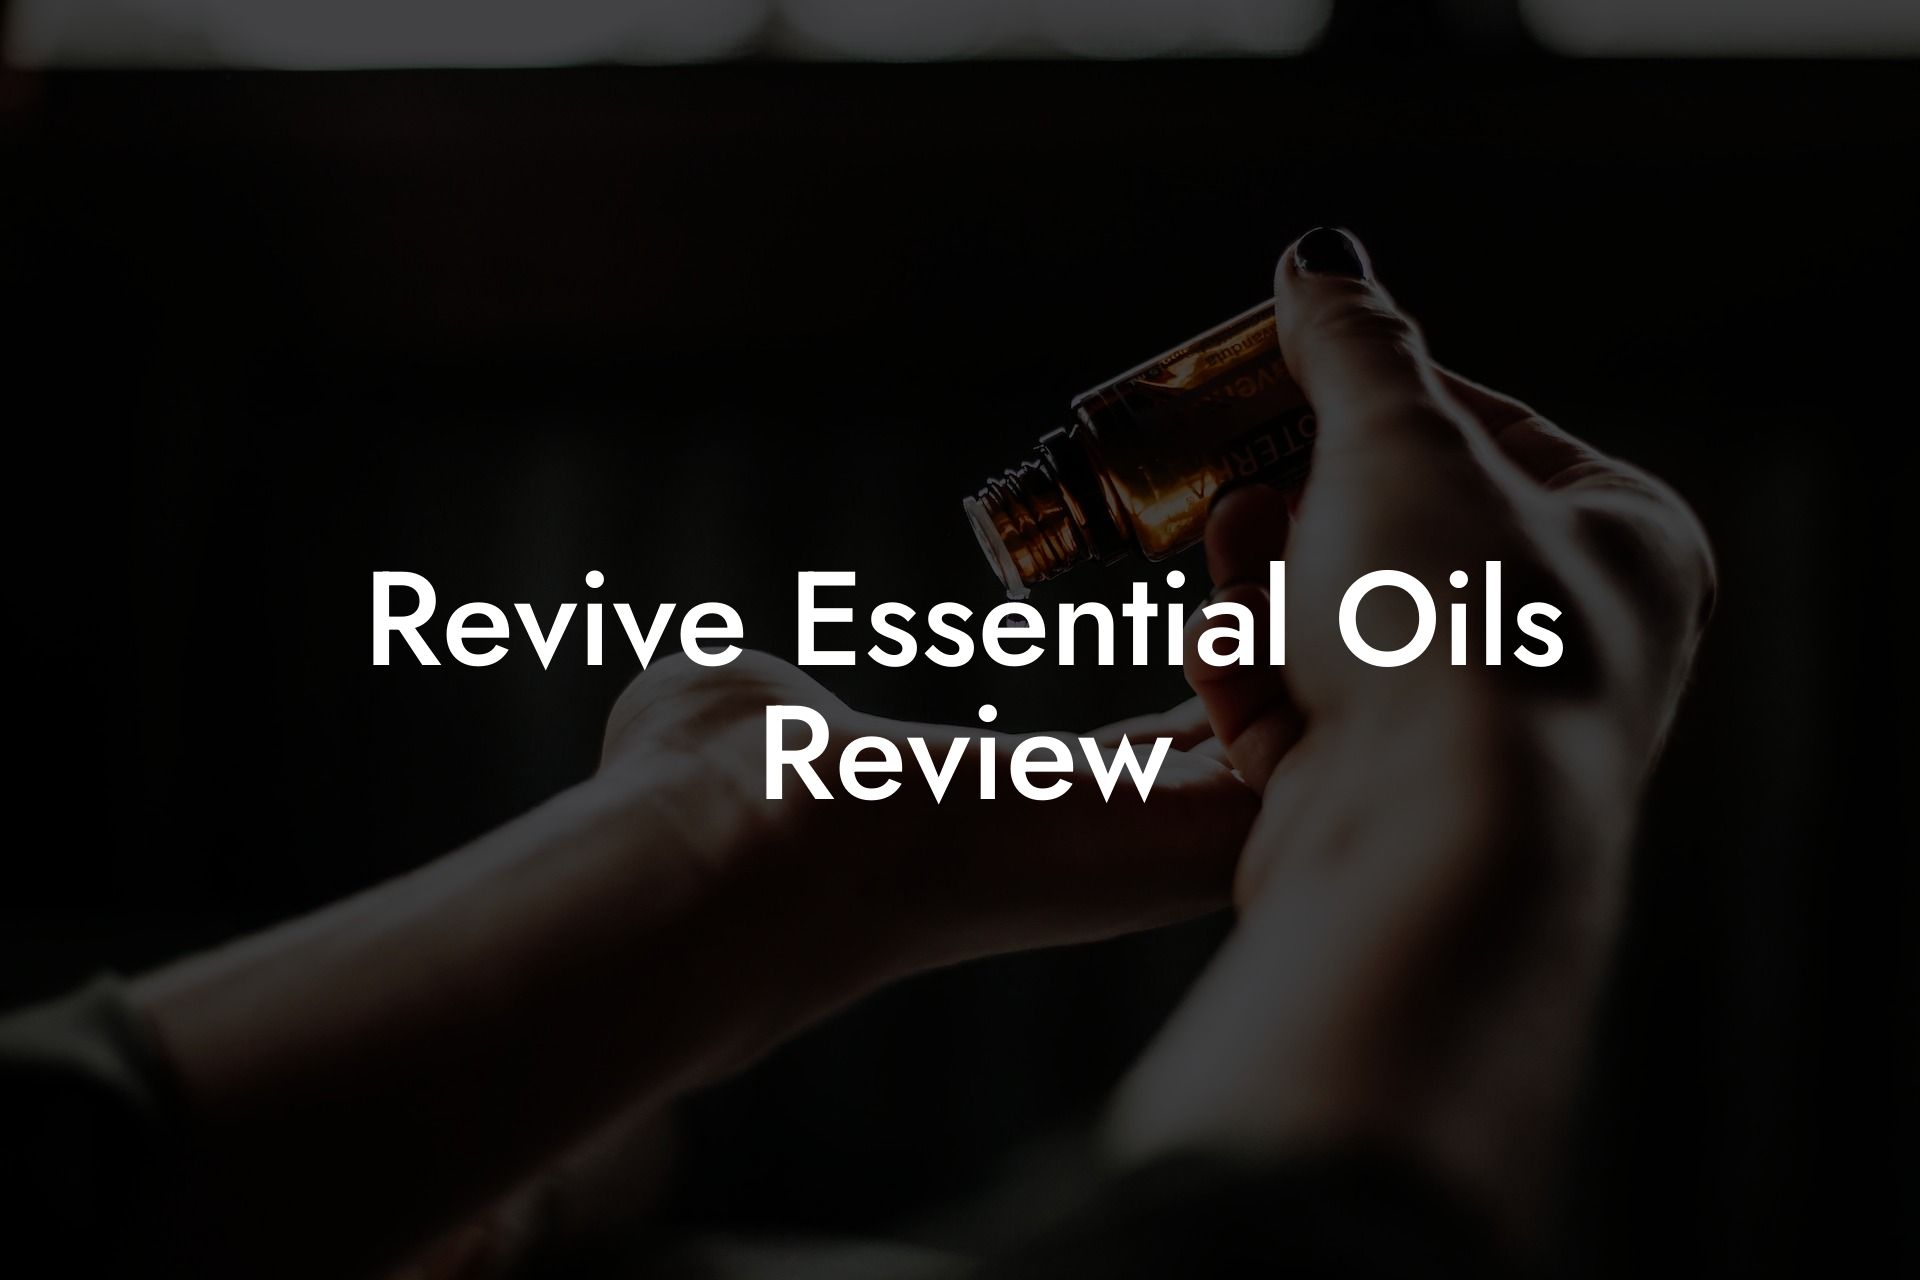 Revive Essential Oils Review